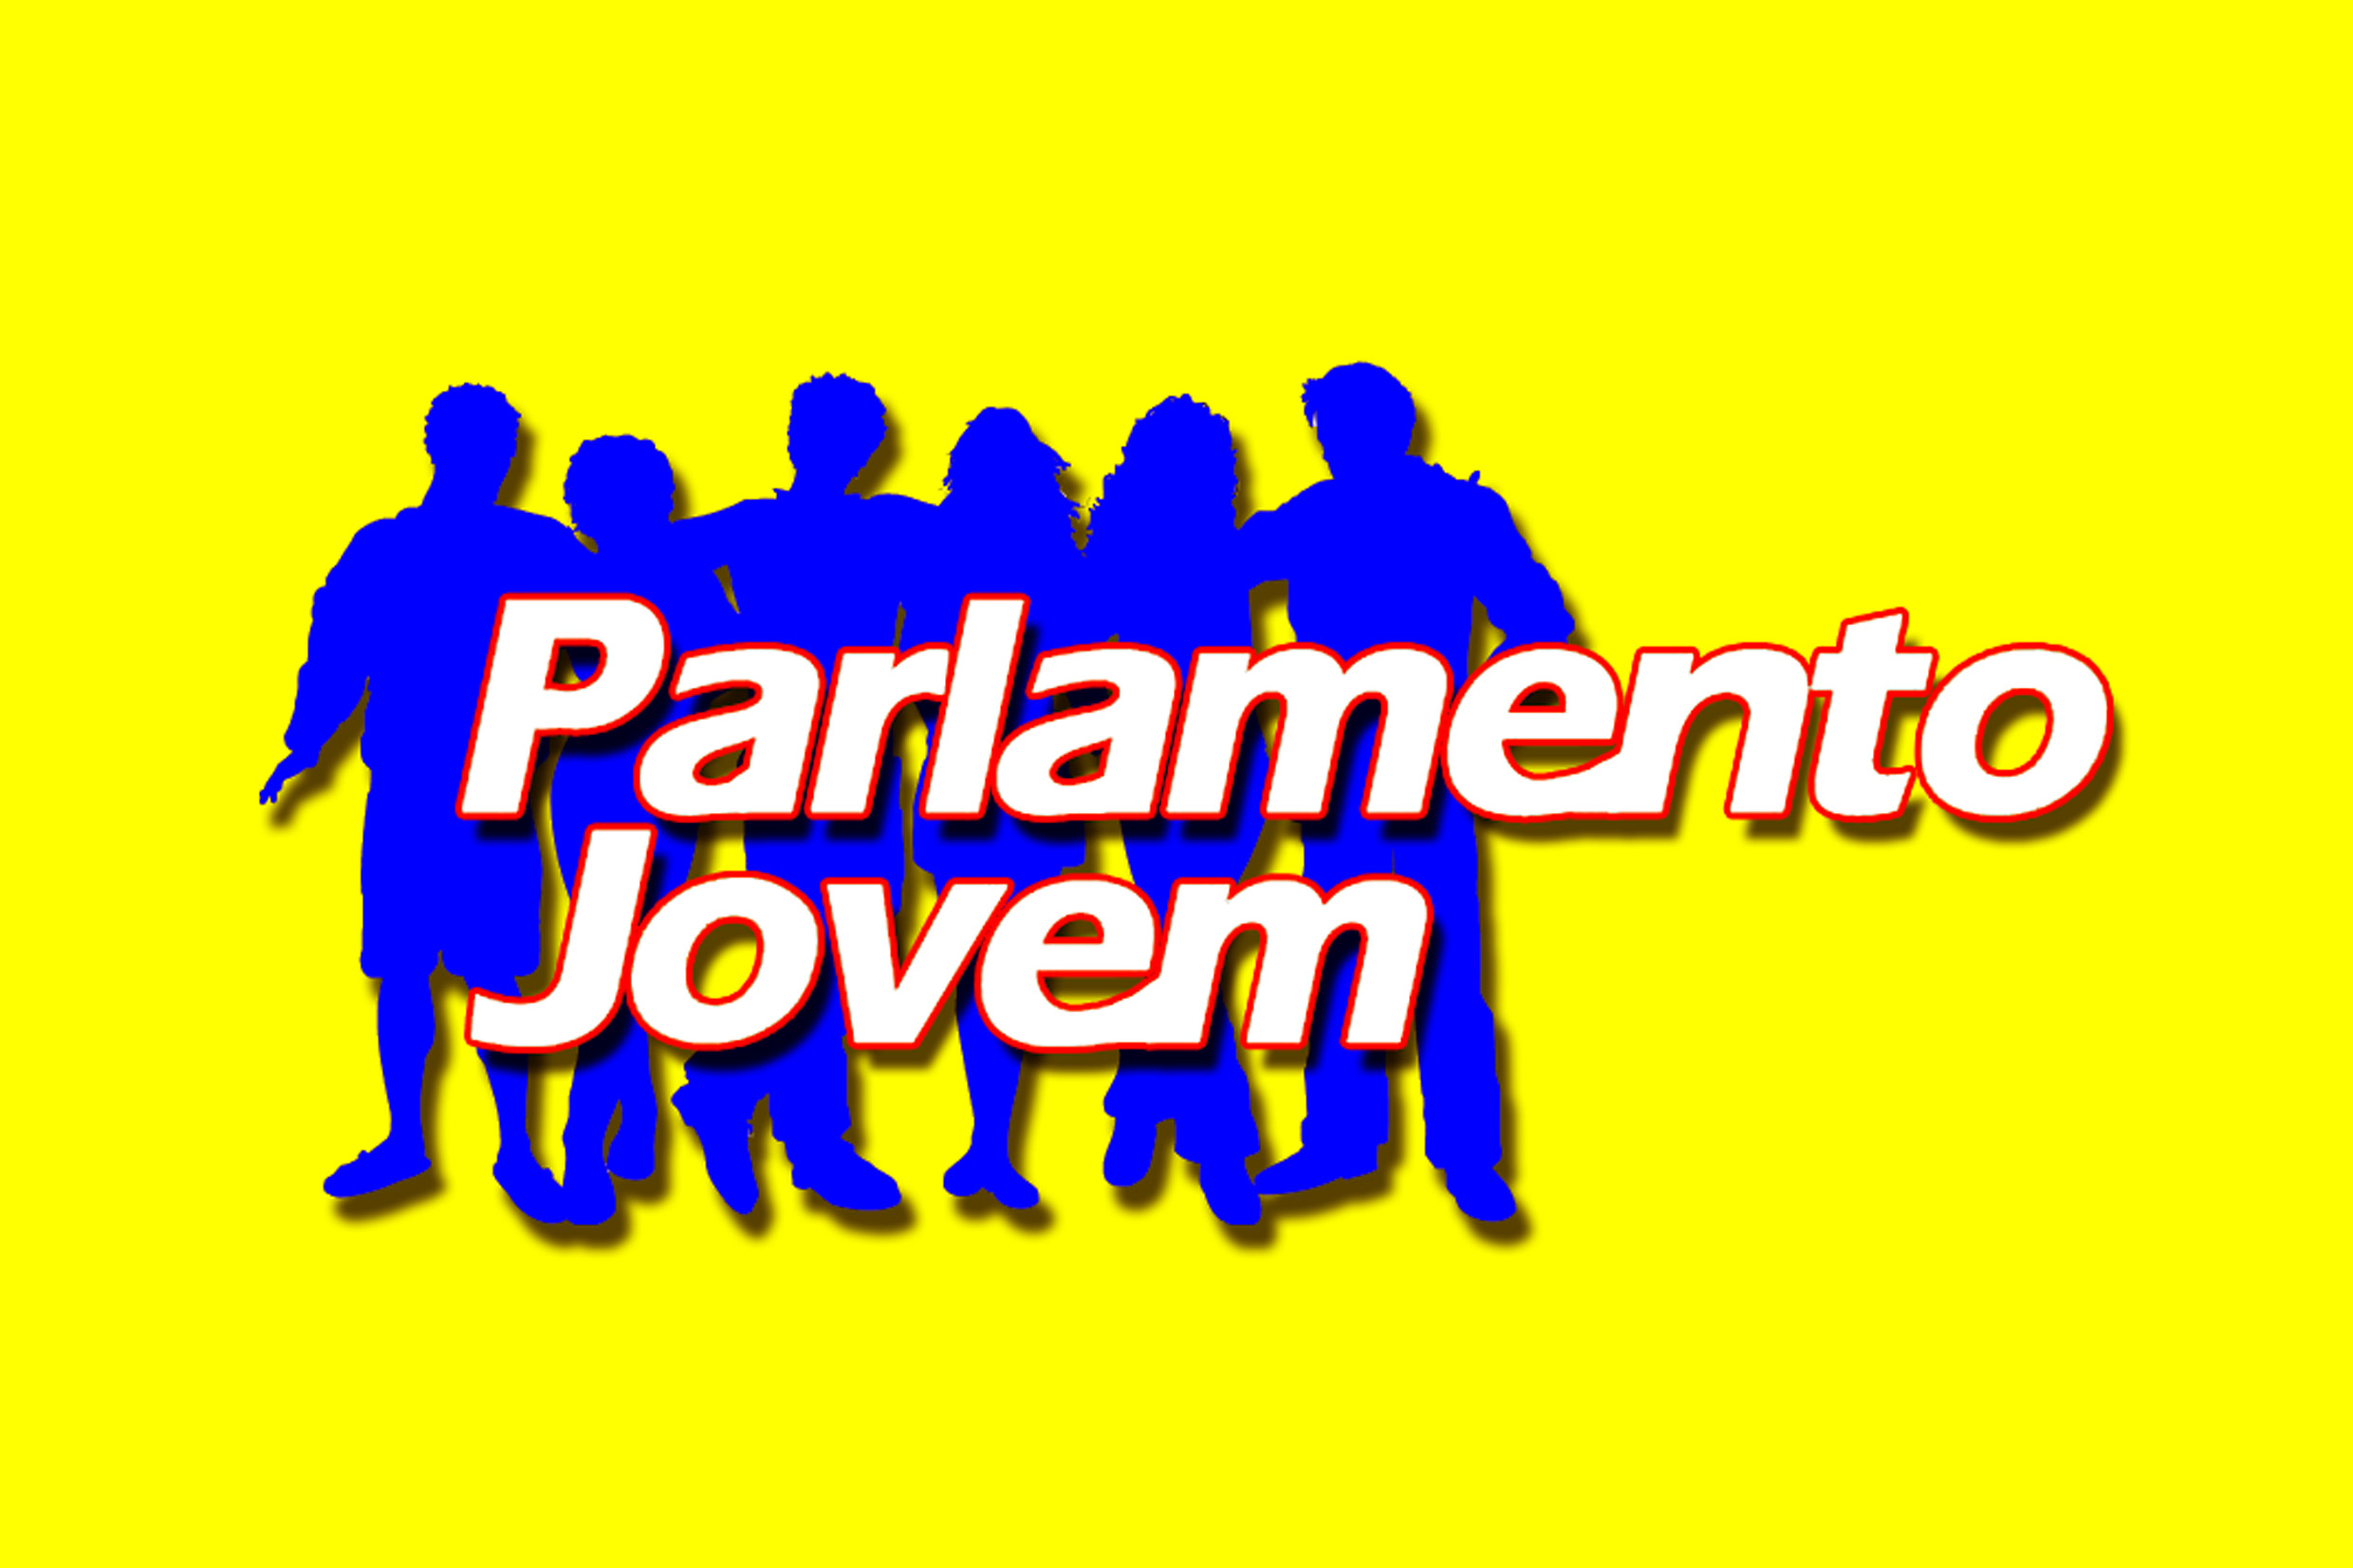 Parlamento Jovem <a style='float:right;color:#ccc' href='https://www3.al.sp.gov.br/repositorio/noticia/N-12-2016/fg198023.jpg' target=_blank><i class='bi bi-zoom-in'></i> Clique para ver a imagem </a>